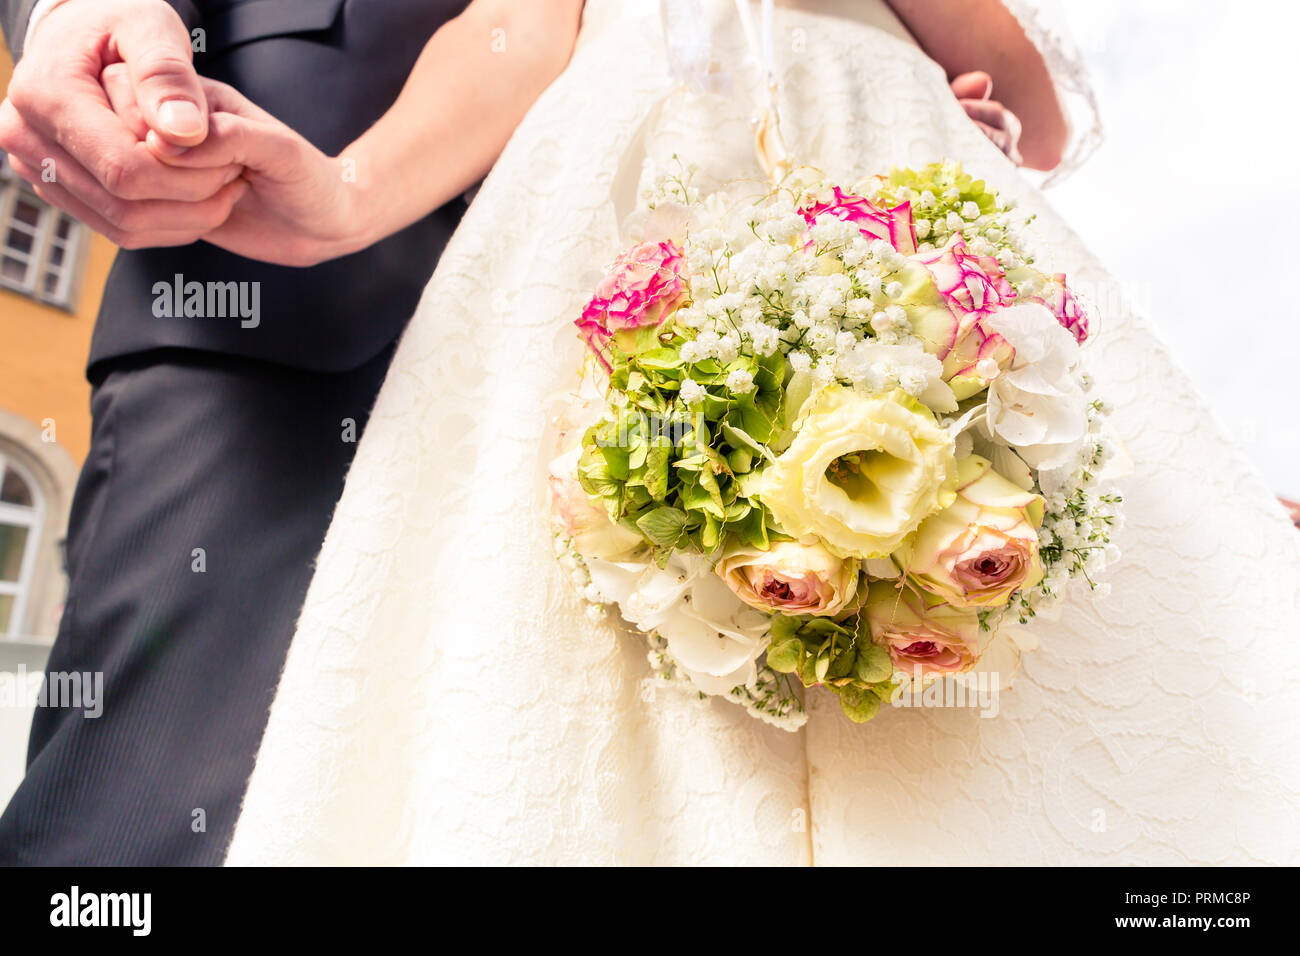 Bride with wedding bouquet holding bridegroom's hand Stock Photo